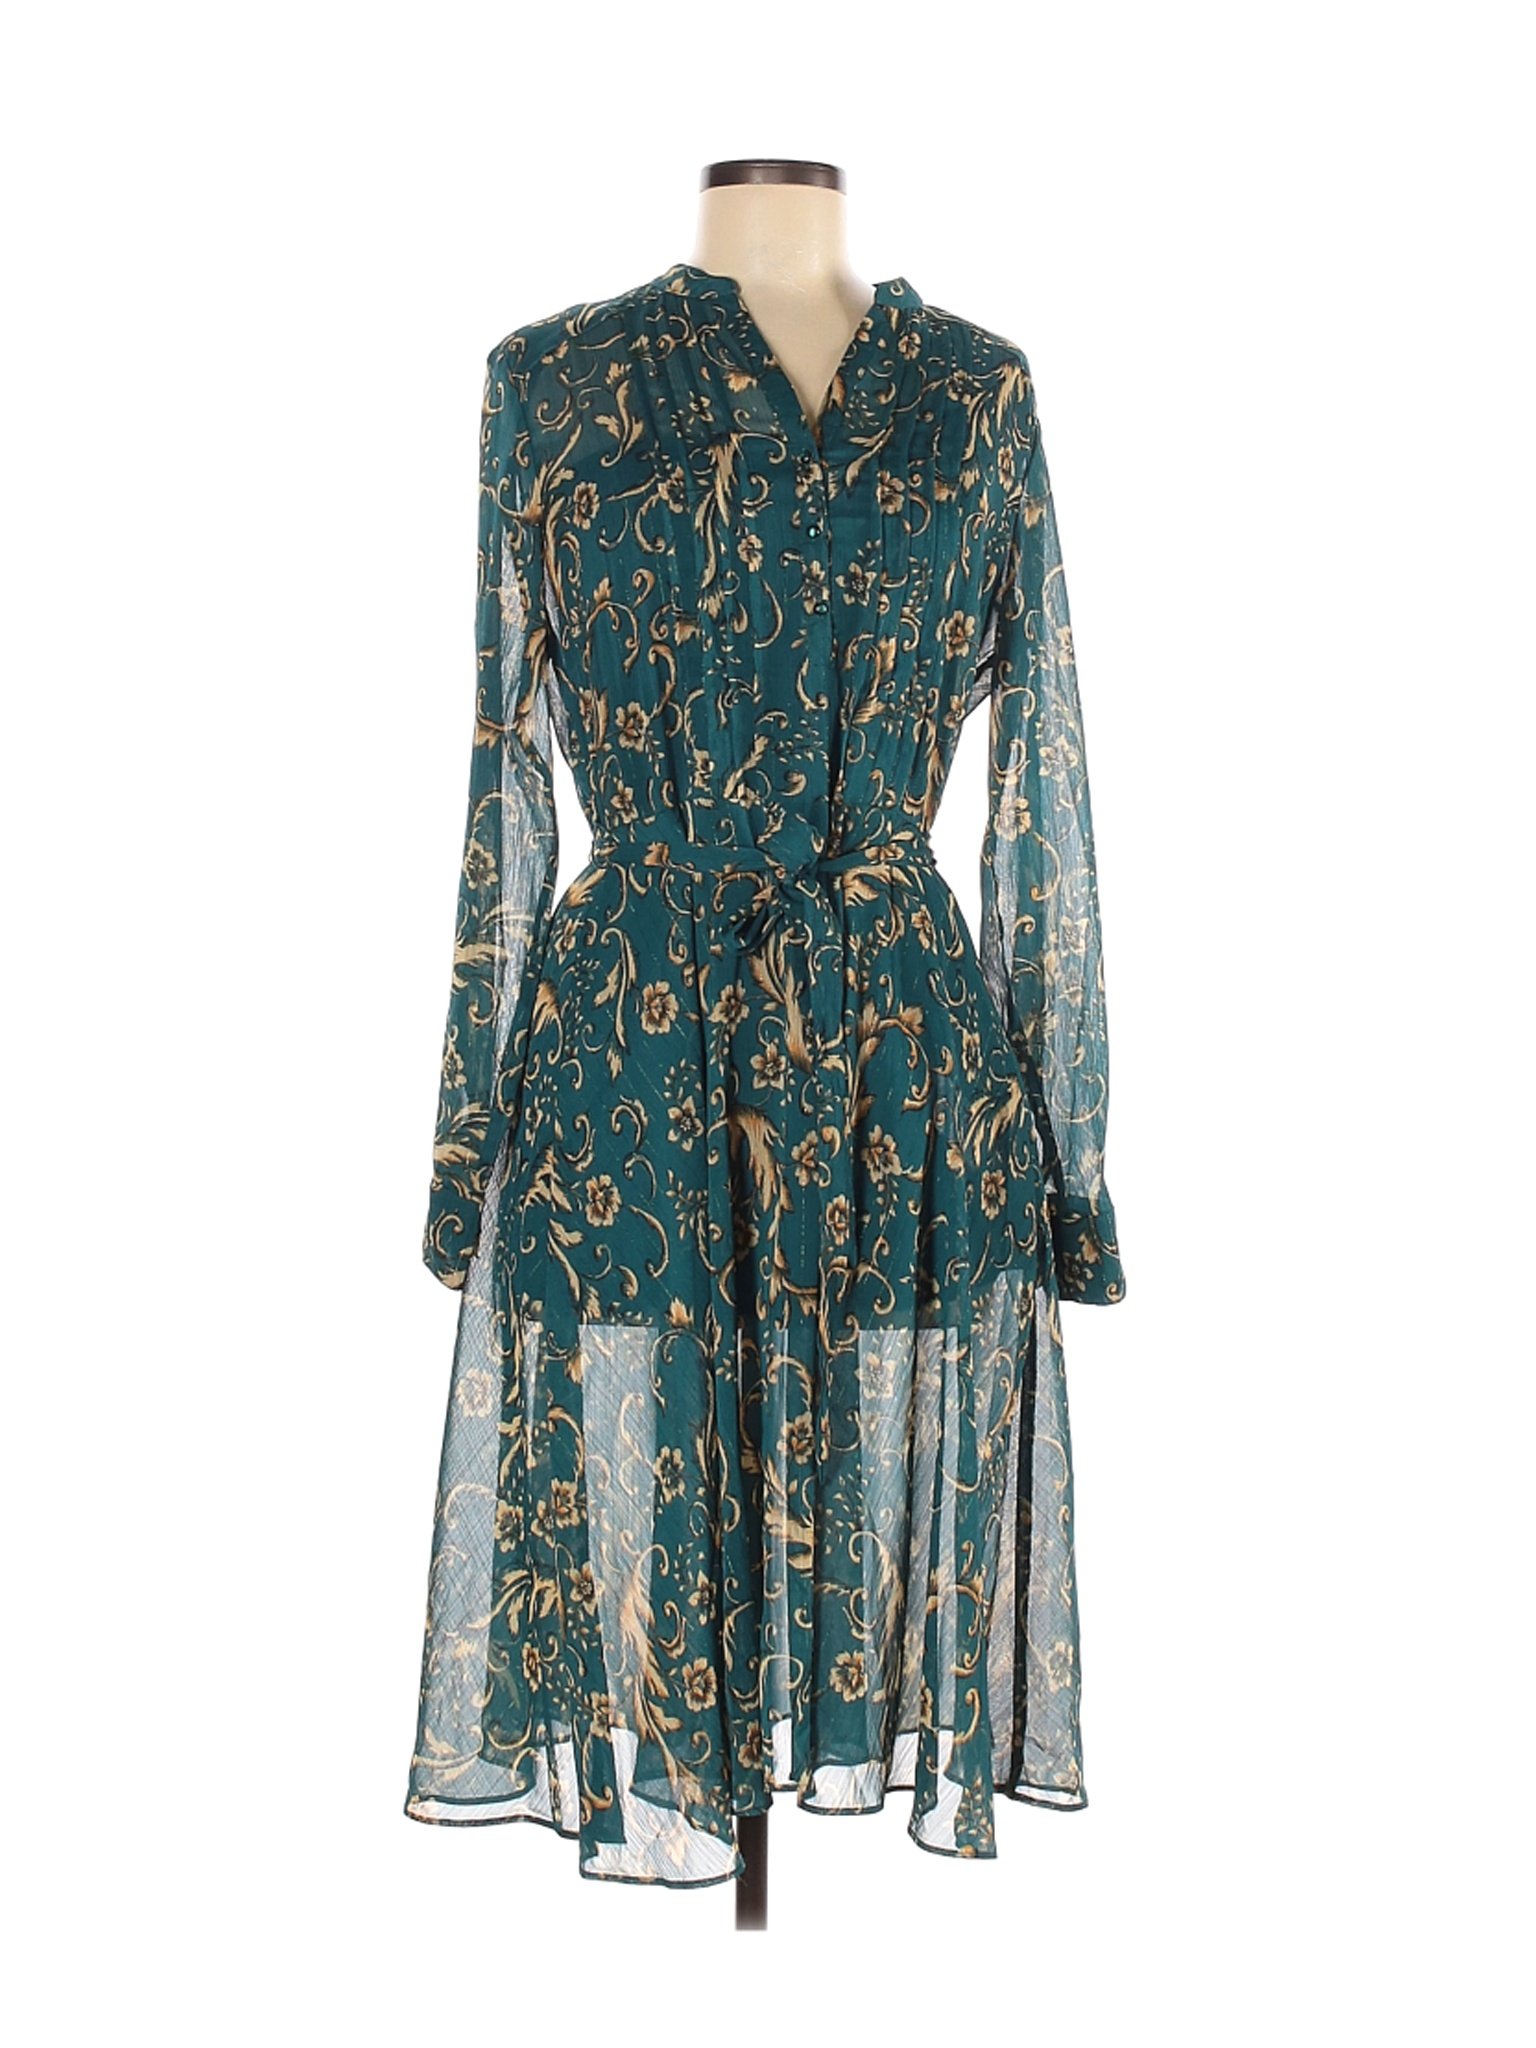 NANETTE Nanette Lepore Women Green Casual Dress 8 | eBay